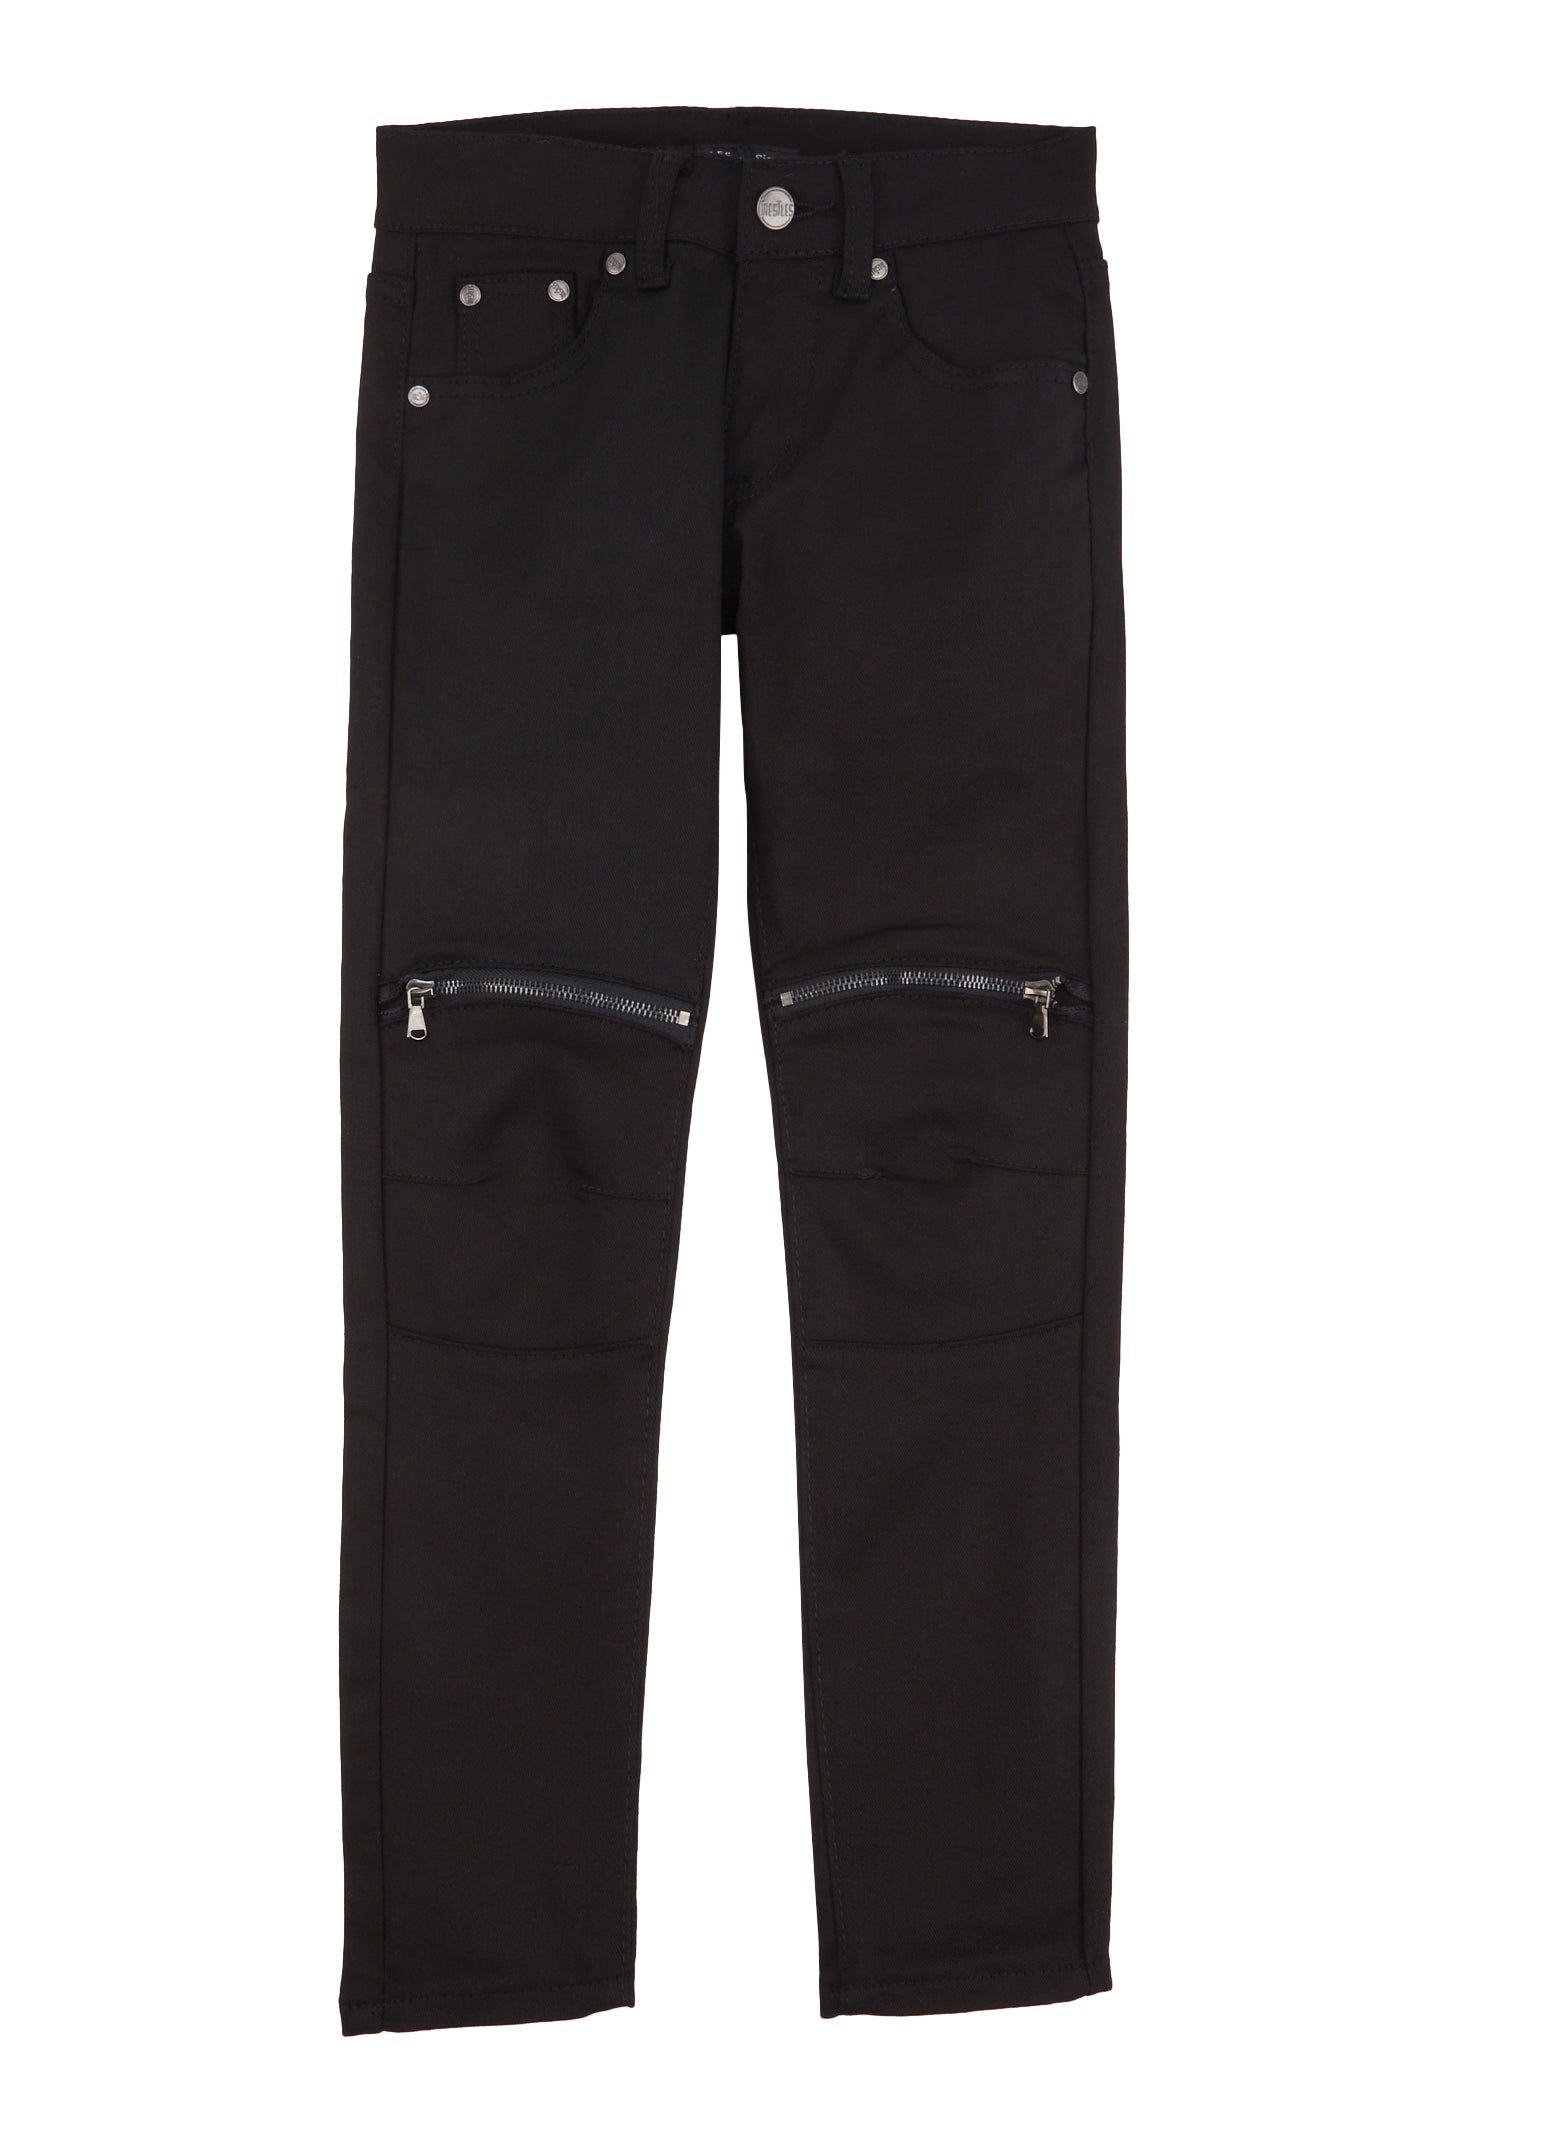 Boys Hyperstretch Zip Knee Moto Jeans, Black, Size 14